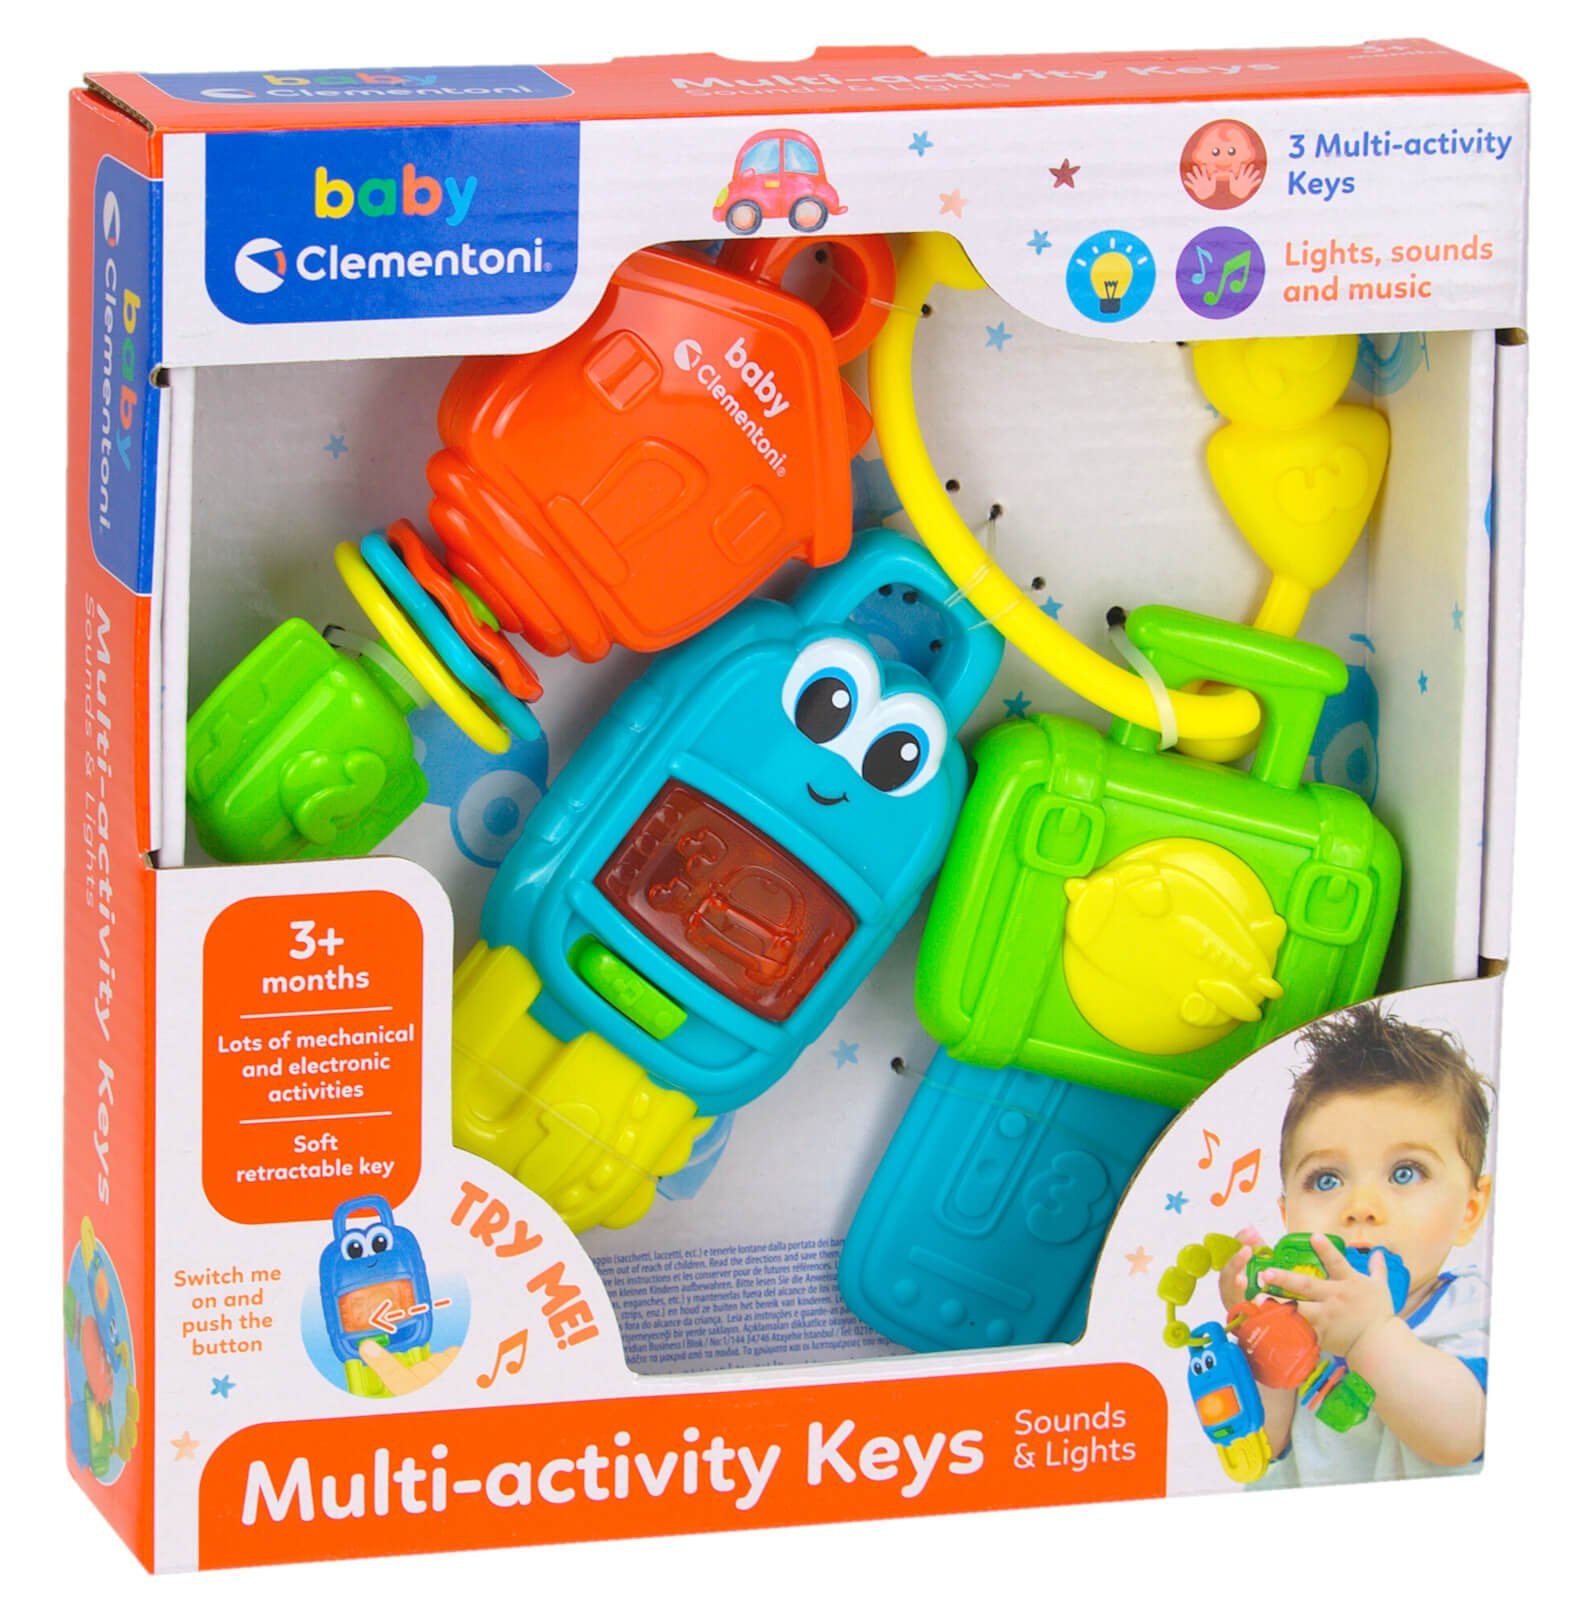 Clementoni® Lernspielzeug Clementoni baby Elektronische Schlüssel